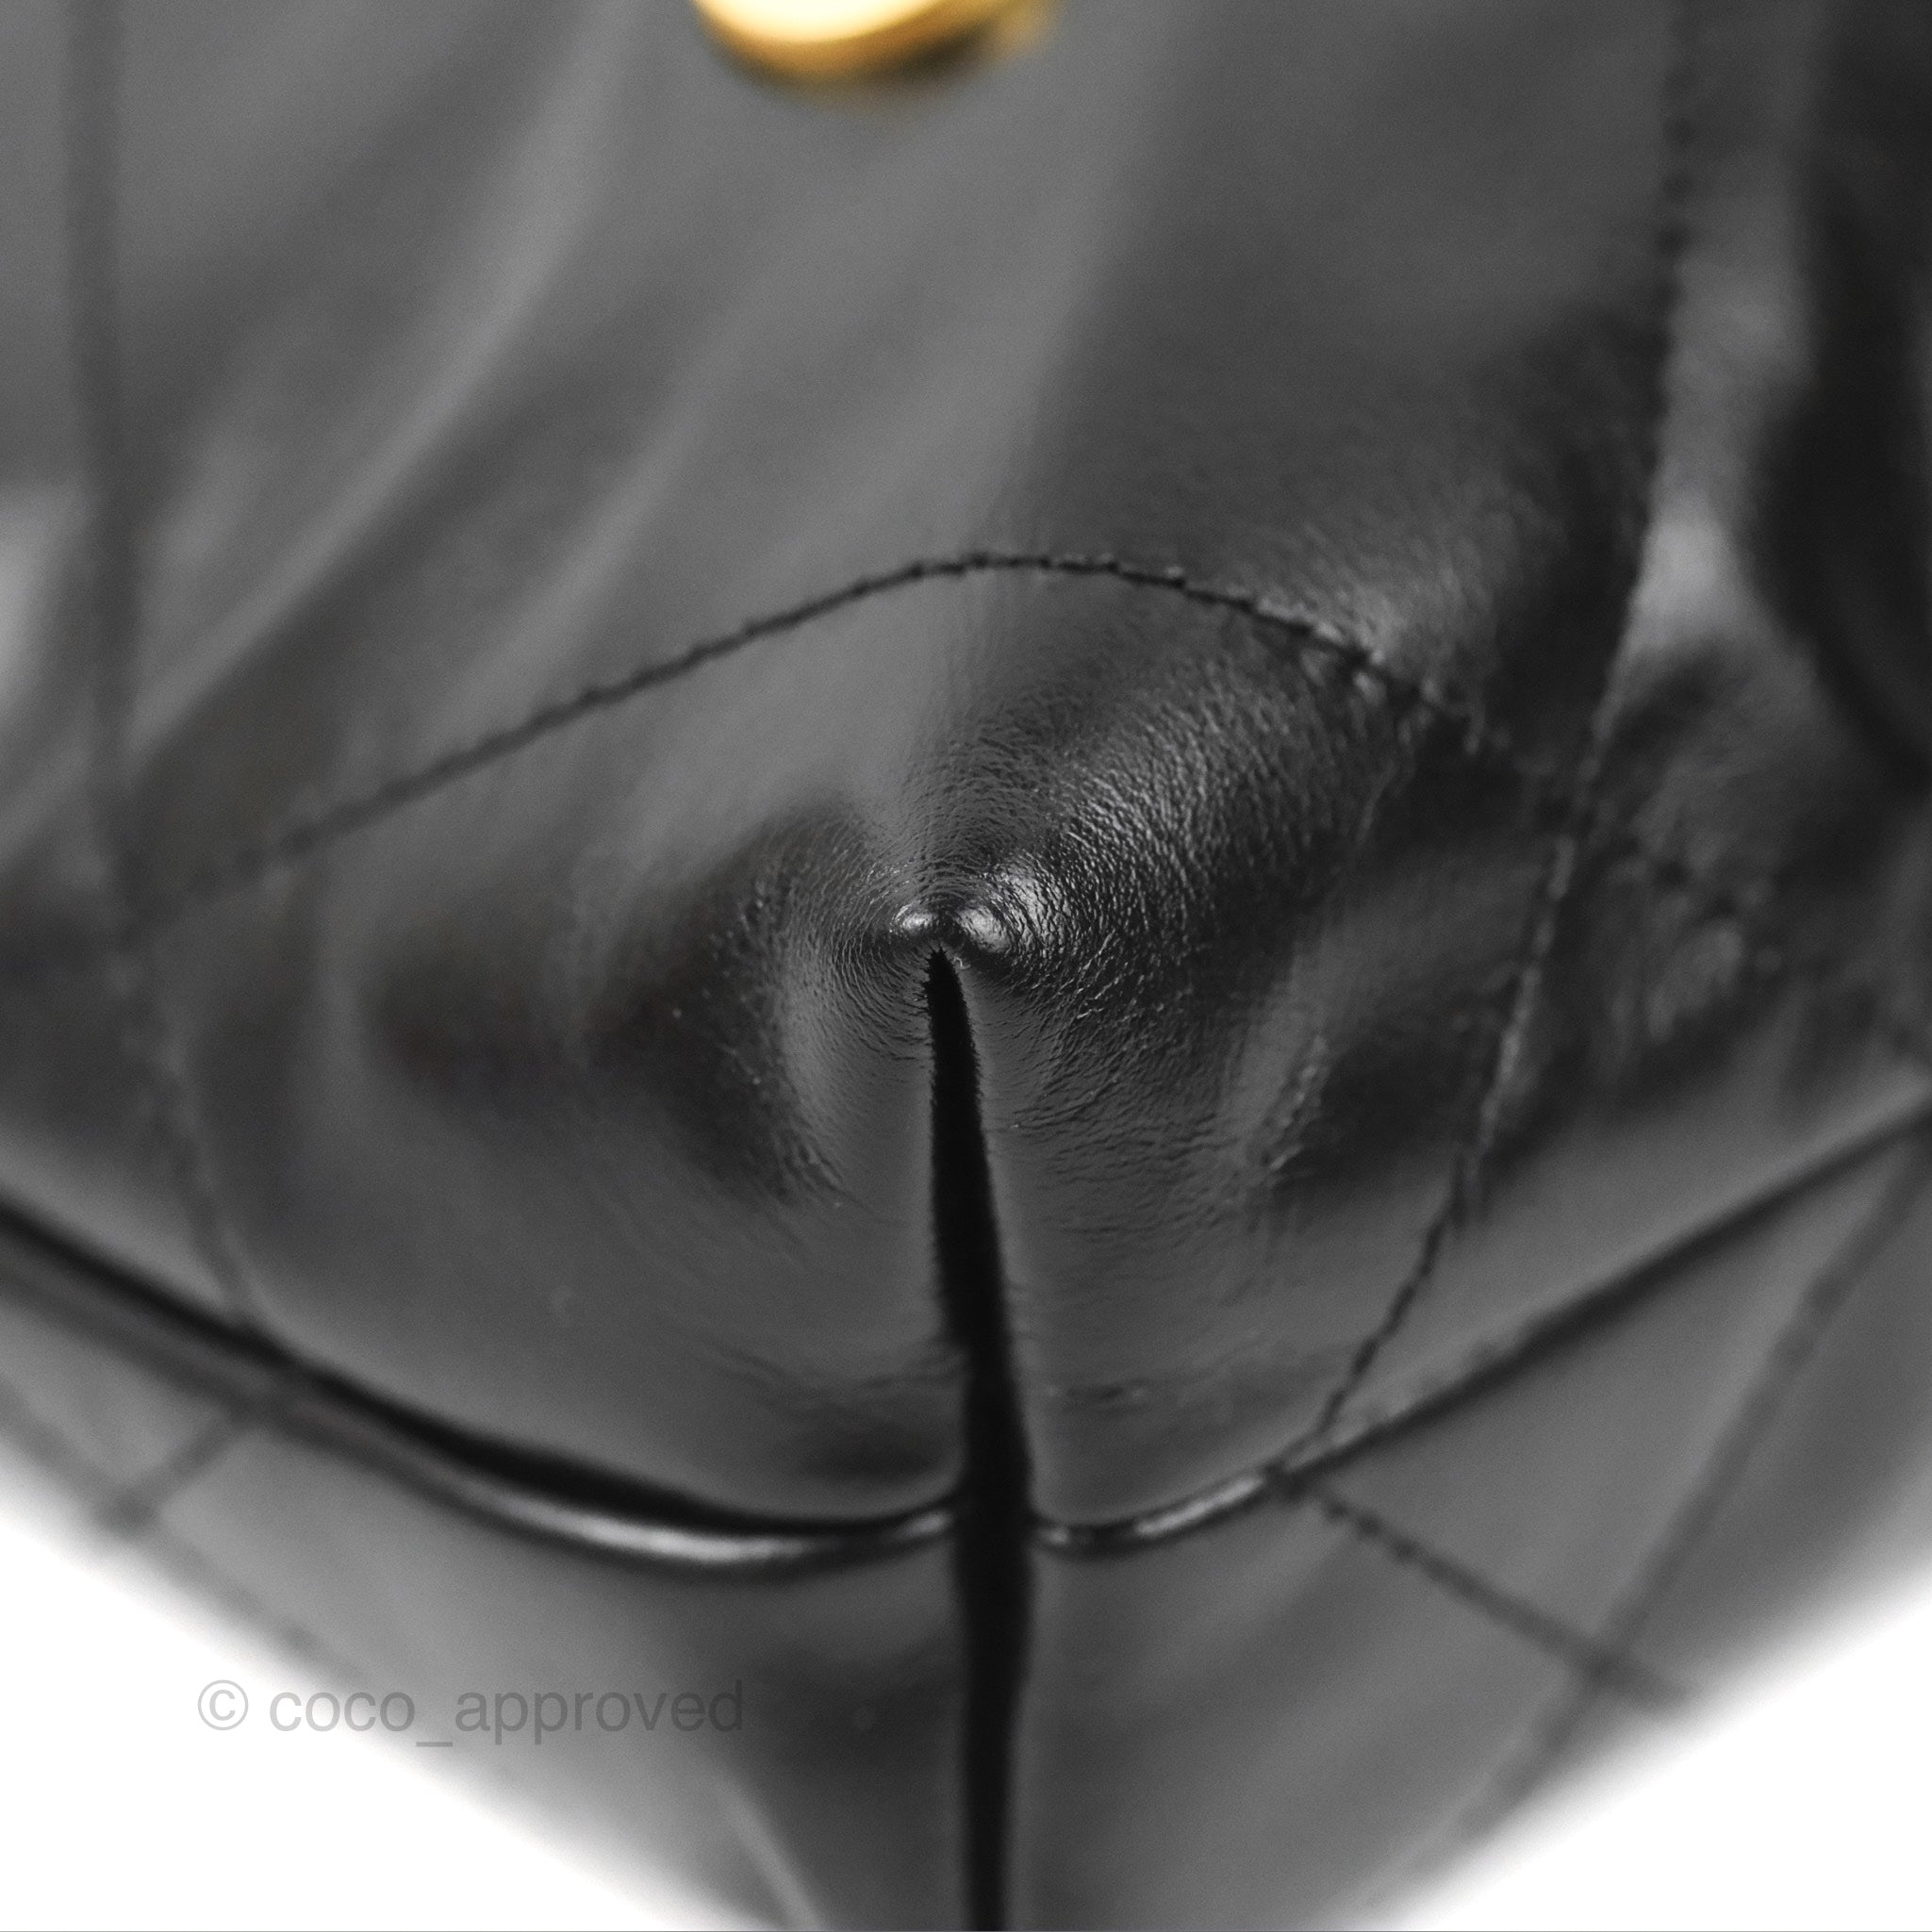 CHANEL 22 line GREY handbag 100% auth. BRAND NEW IN BOX bag